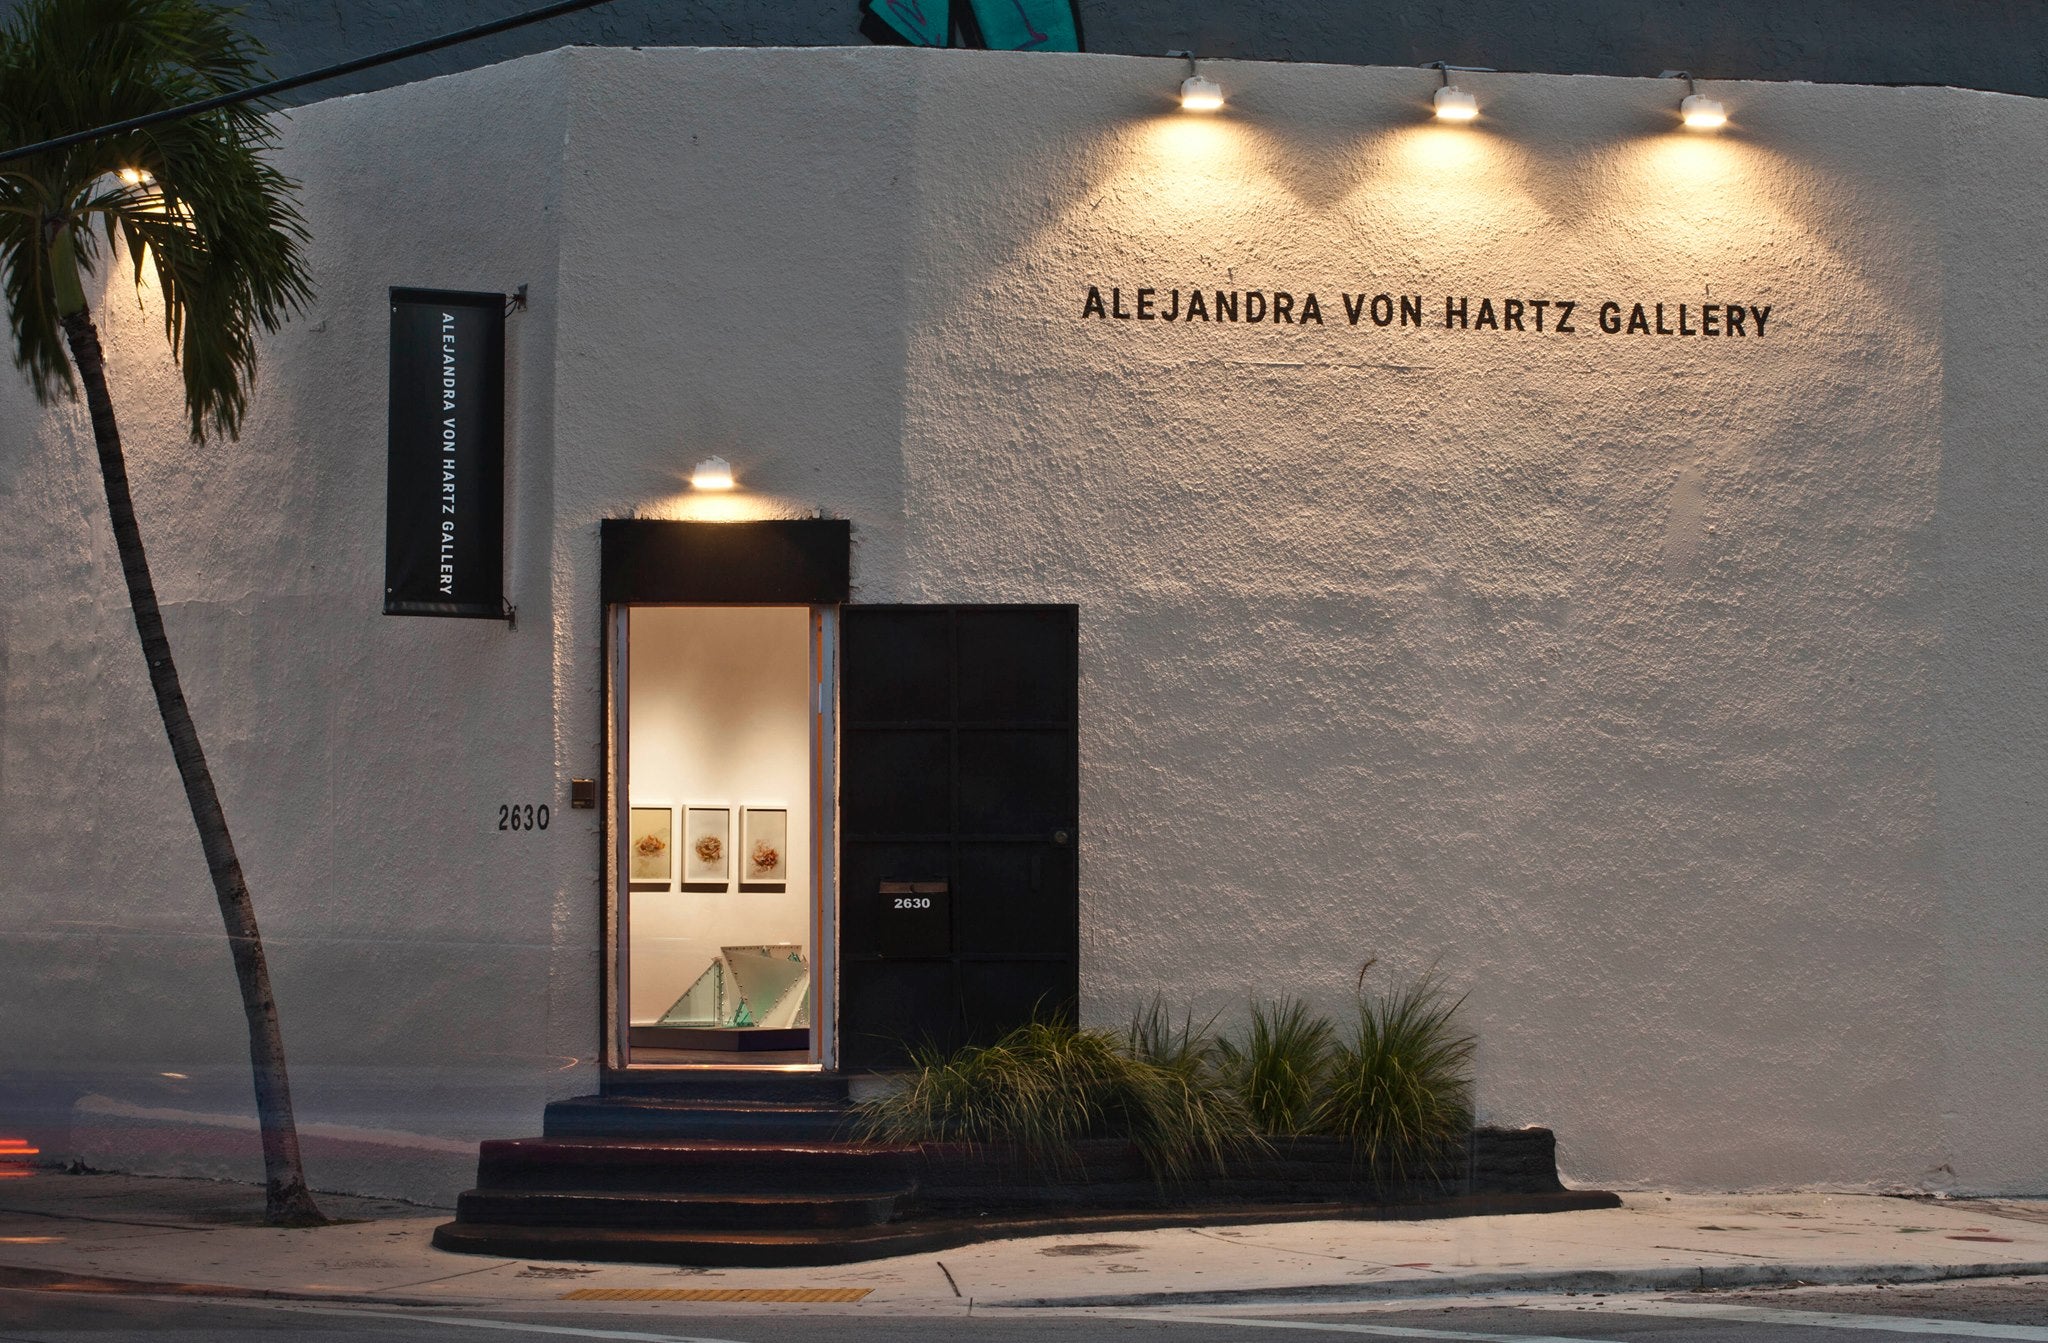 Alejandra von Hartz Gallery